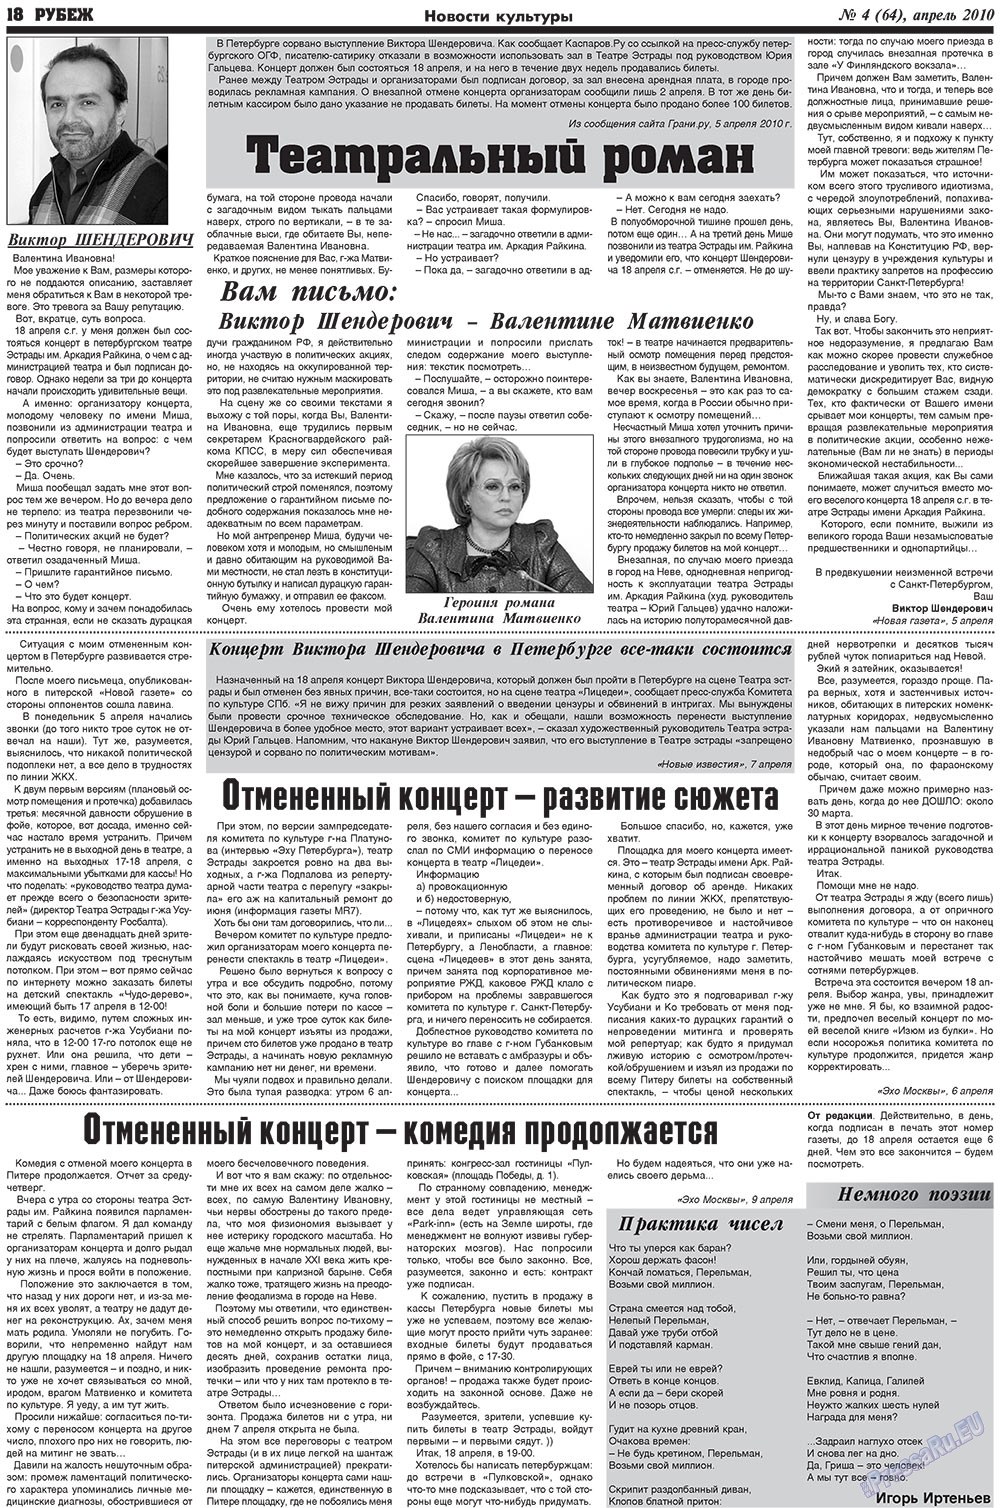 Рубеж, газета. 2010 №4 стр.18